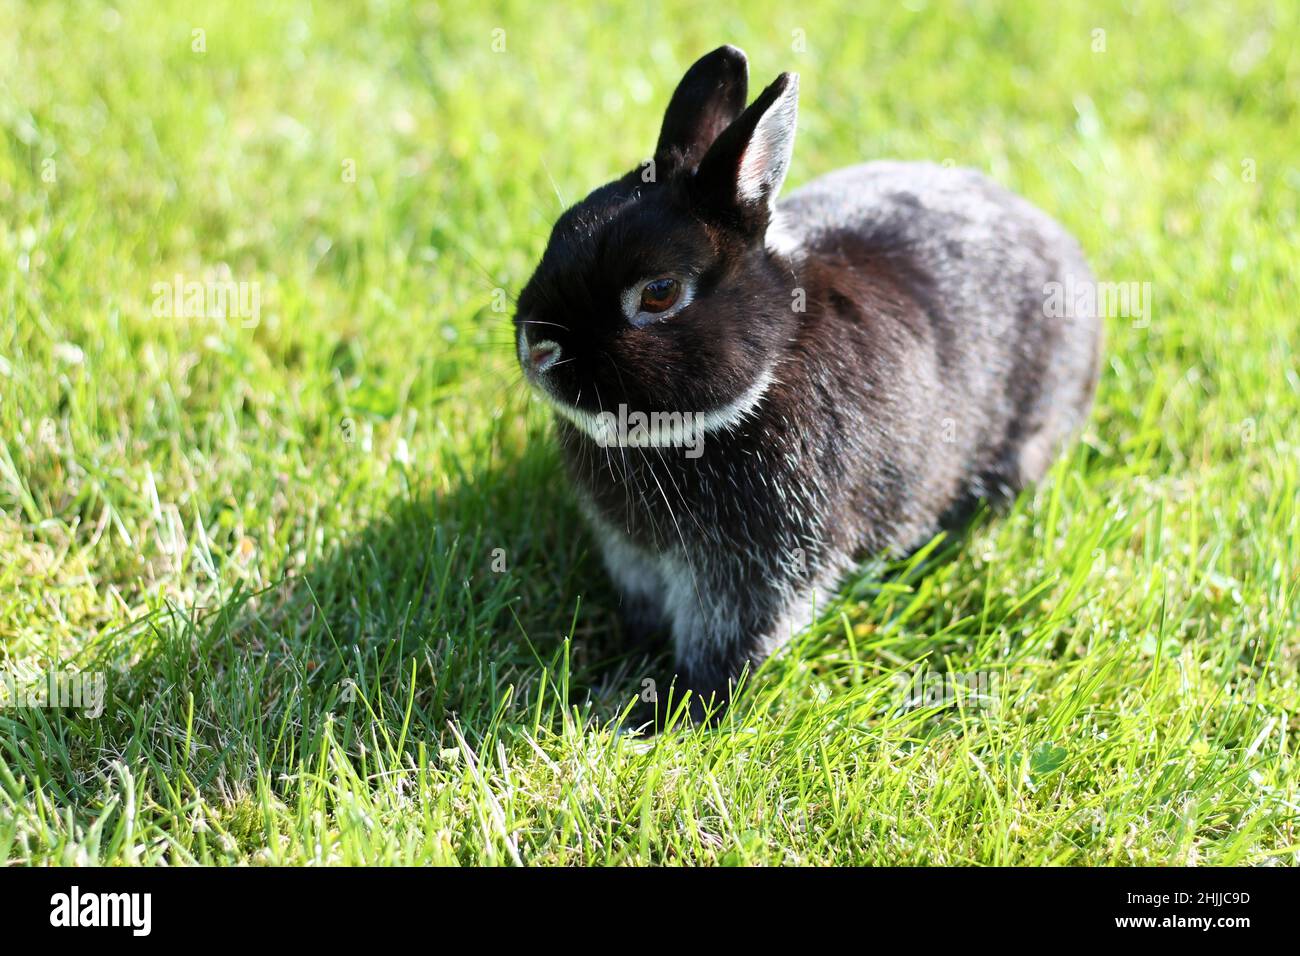 Little black rabbit on green grass background. Netherland Dwarf Rabbit on spring lawn. Stock Photo